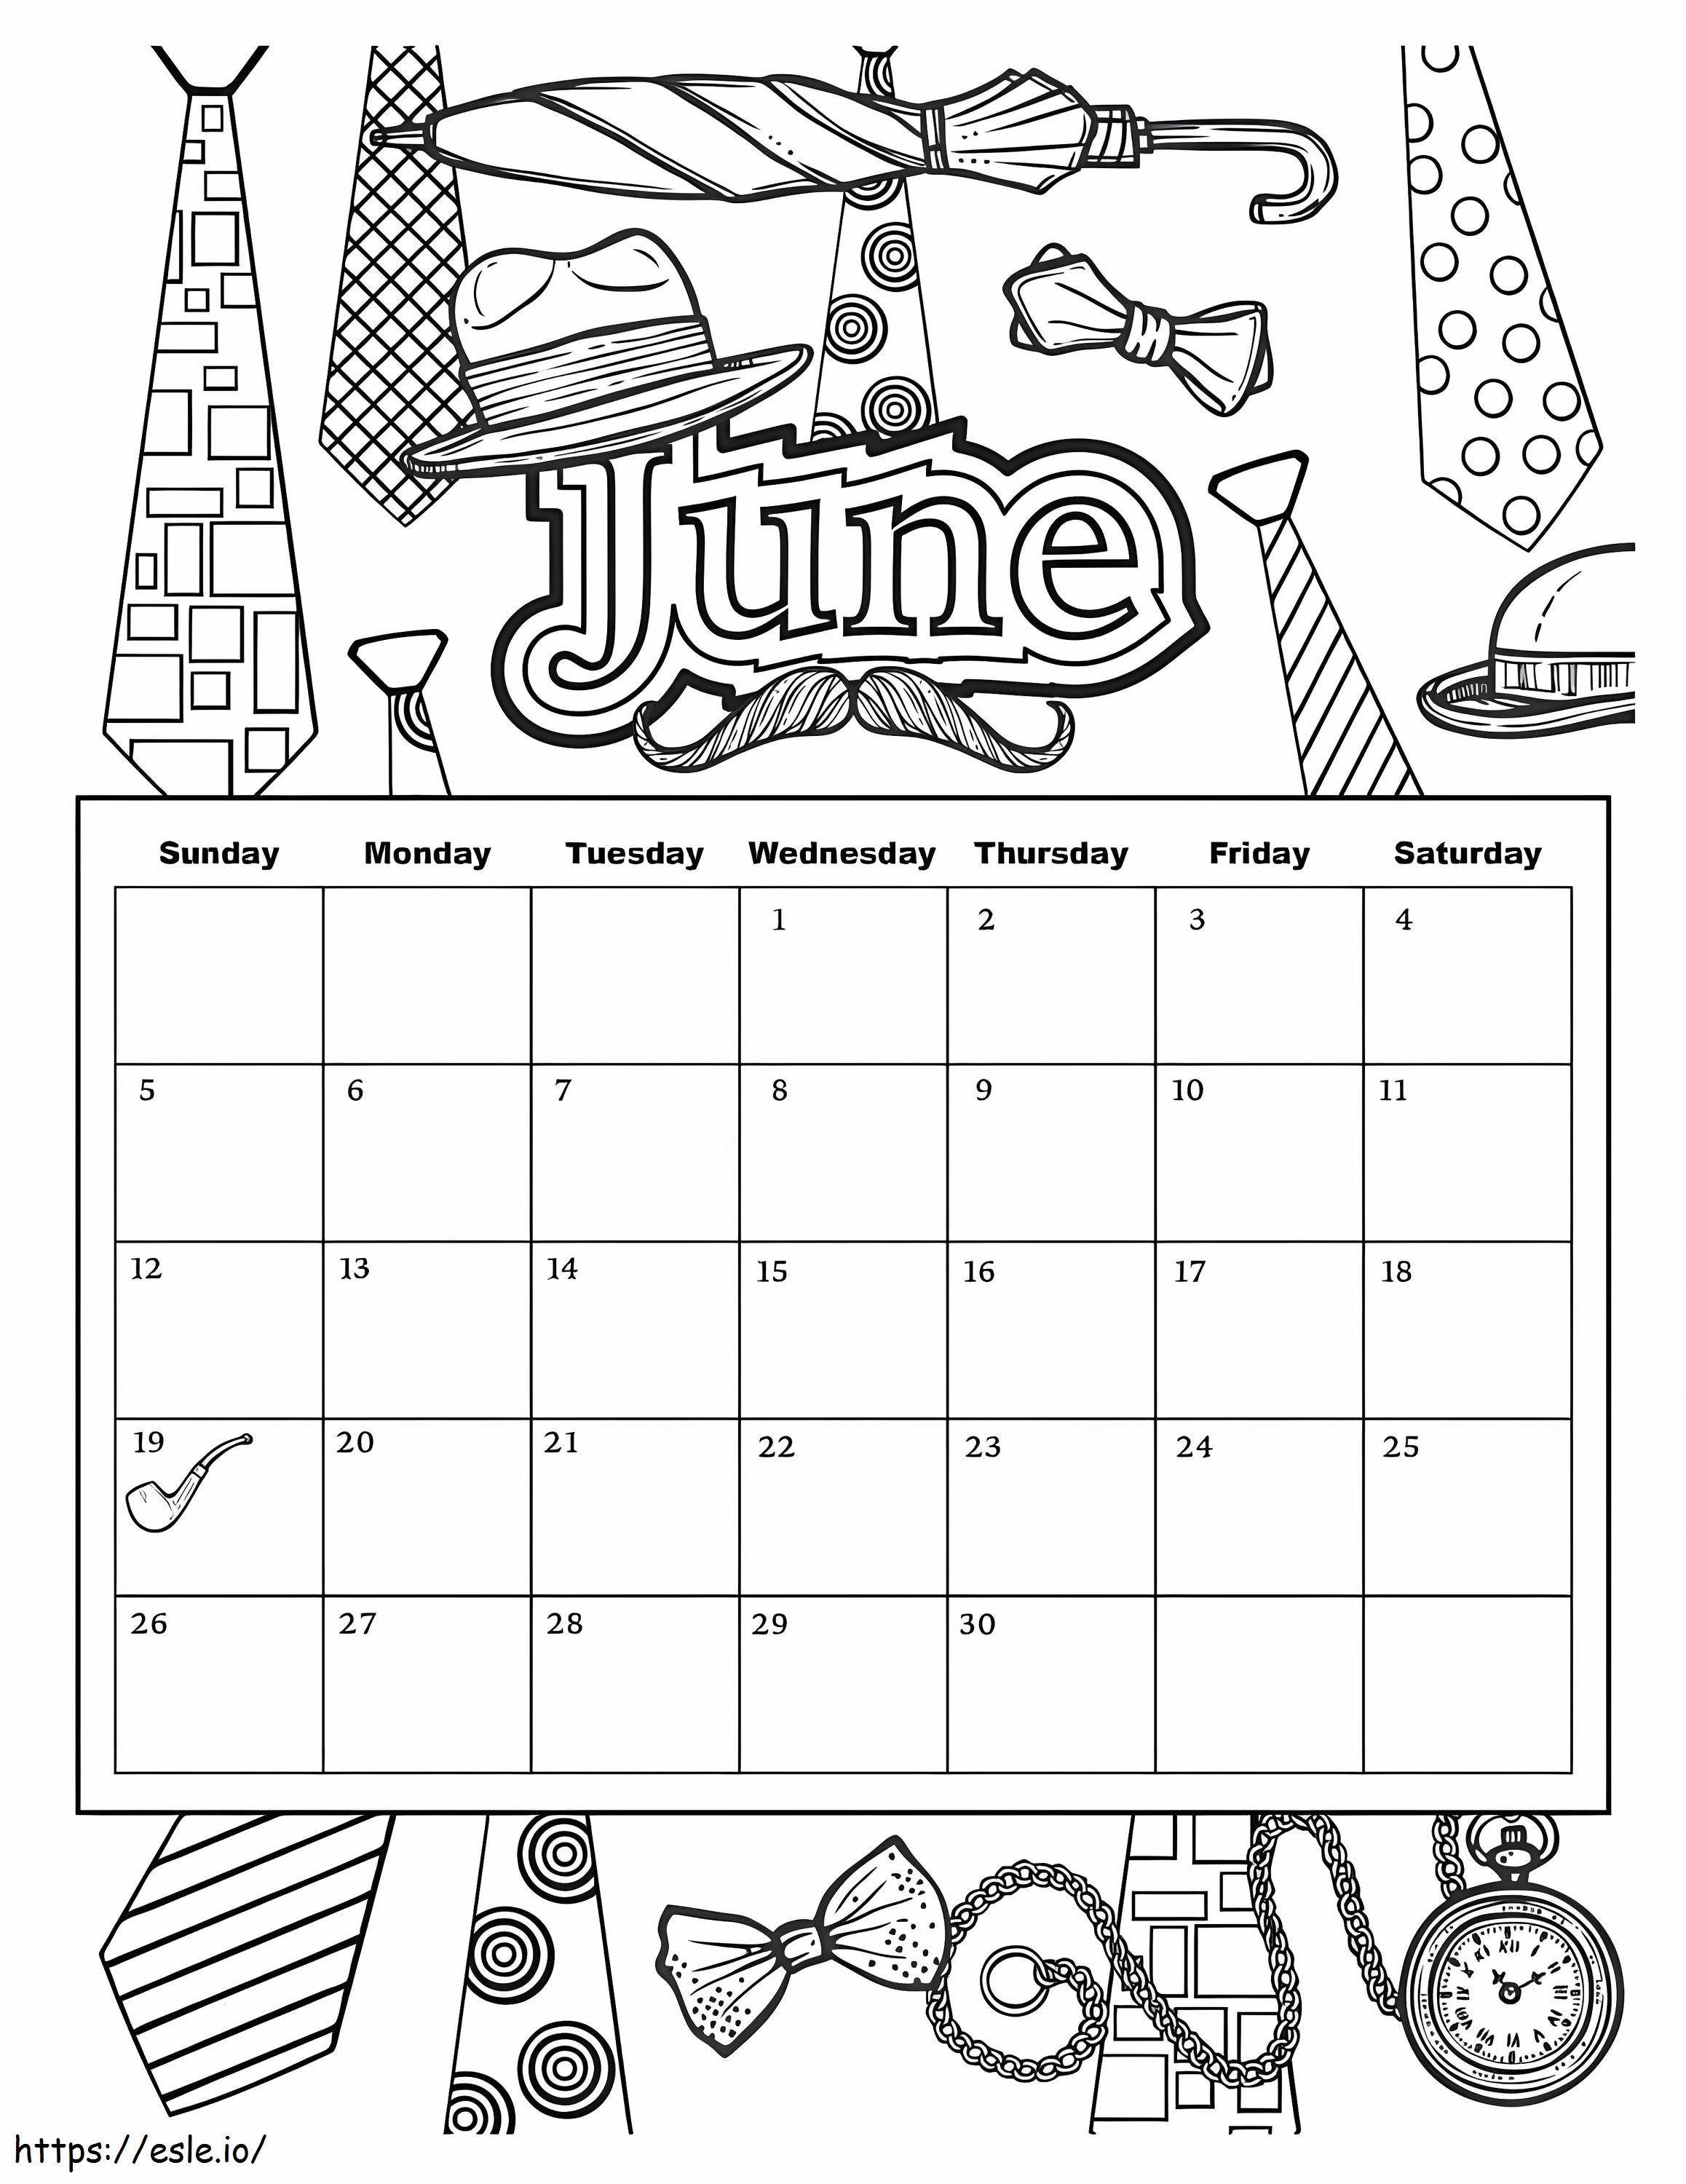 June 2019 Calendar coloring page